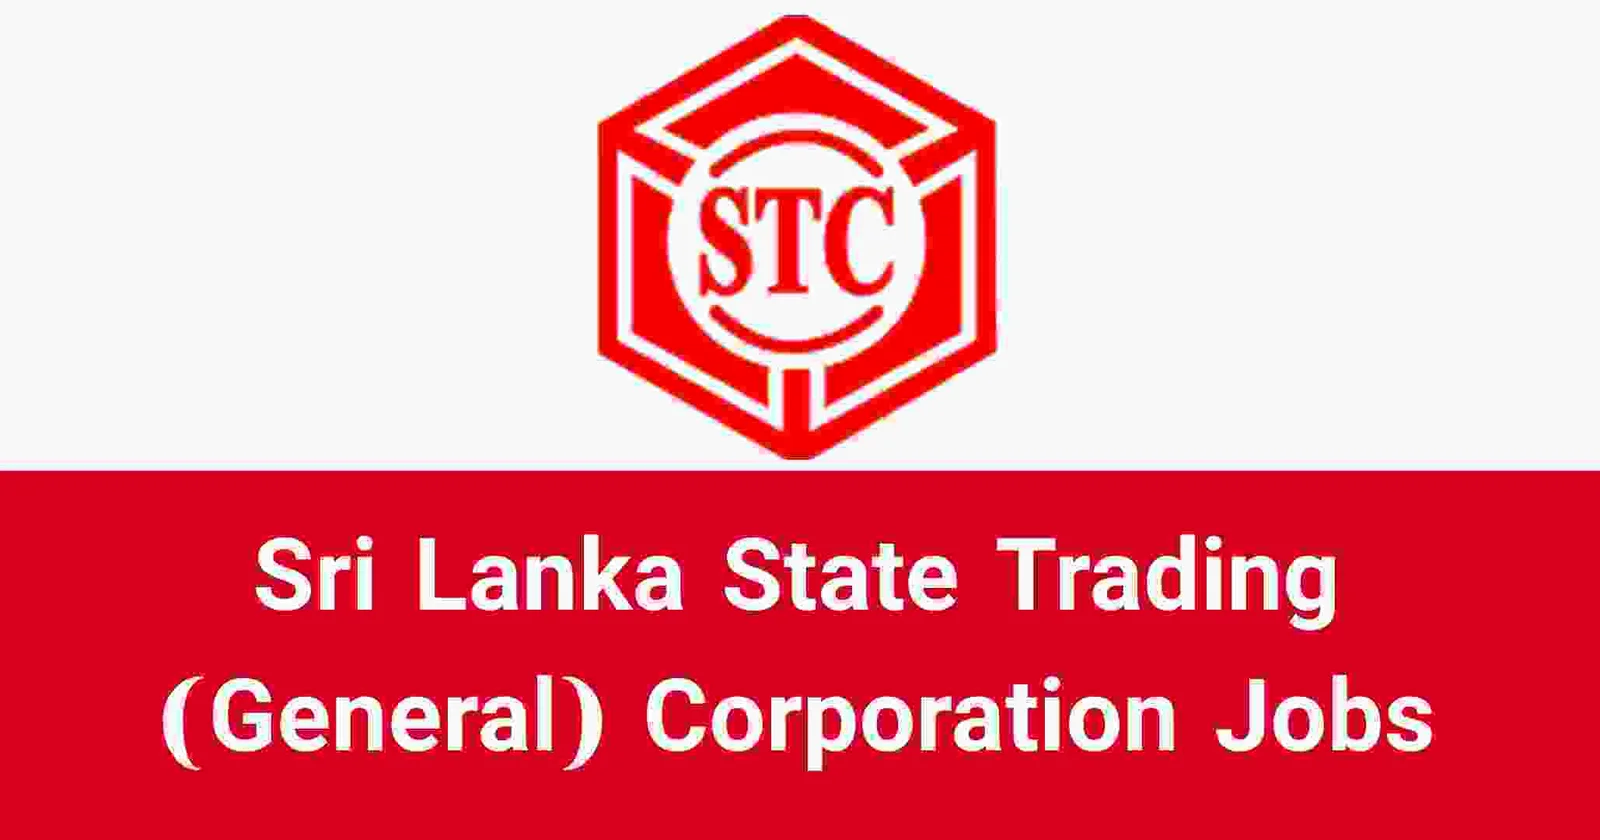 Sri Lanka State Trading (General) Corporation Jobs Vacancies